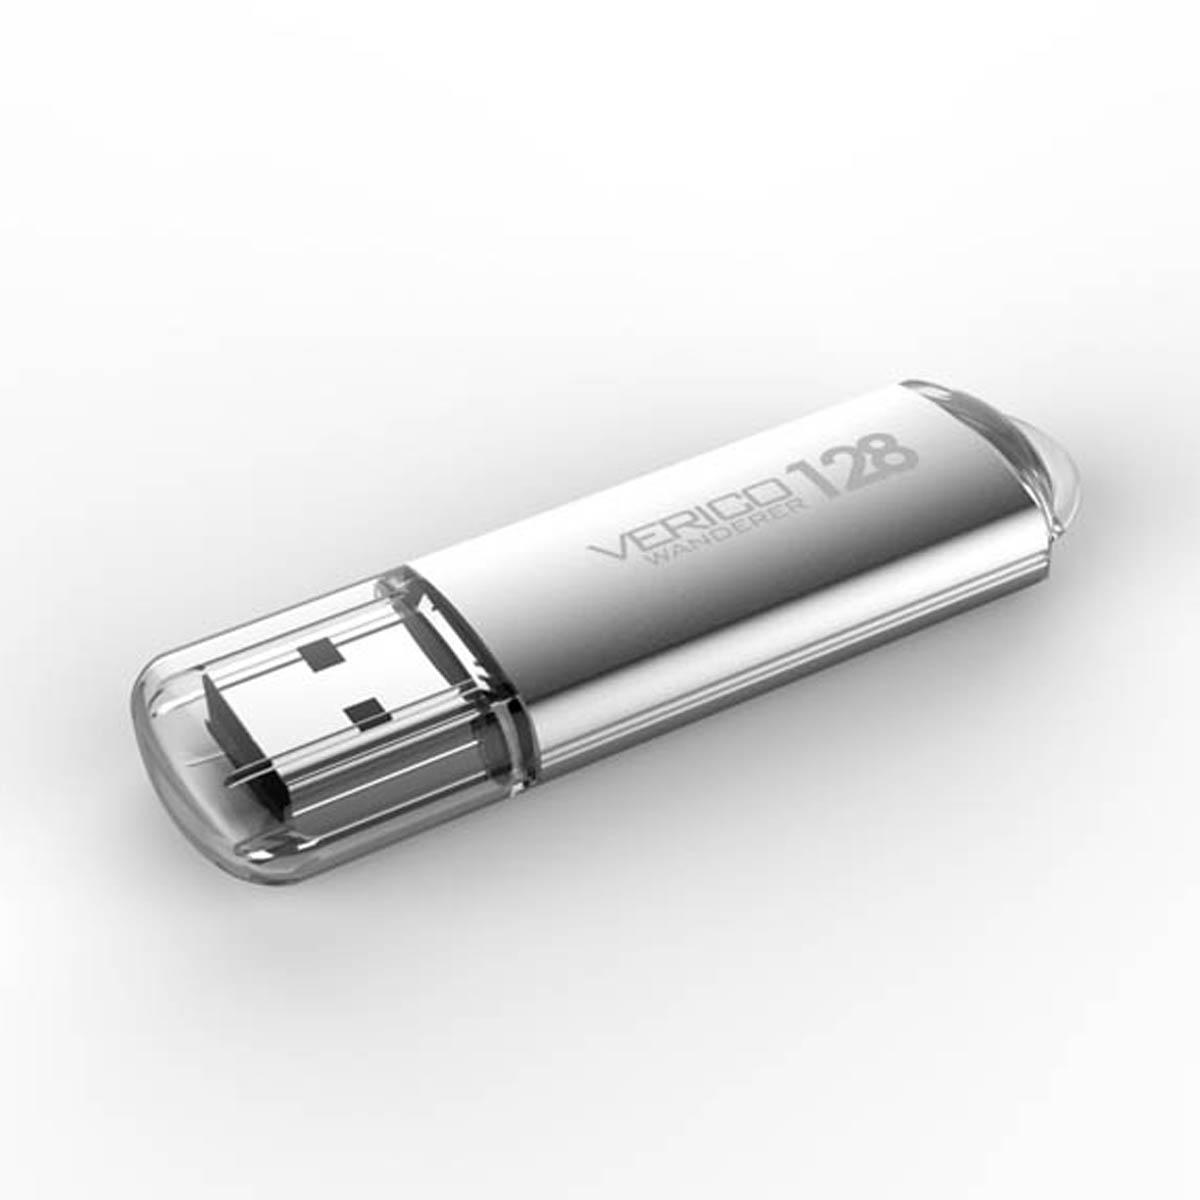 MEMORIA USB VERICO (1UDOV-M4SR83-NN) 8GB WANDERERVM04L, METALICO PLATA, USB2.0 - 1UDOV-M4SR83-NN